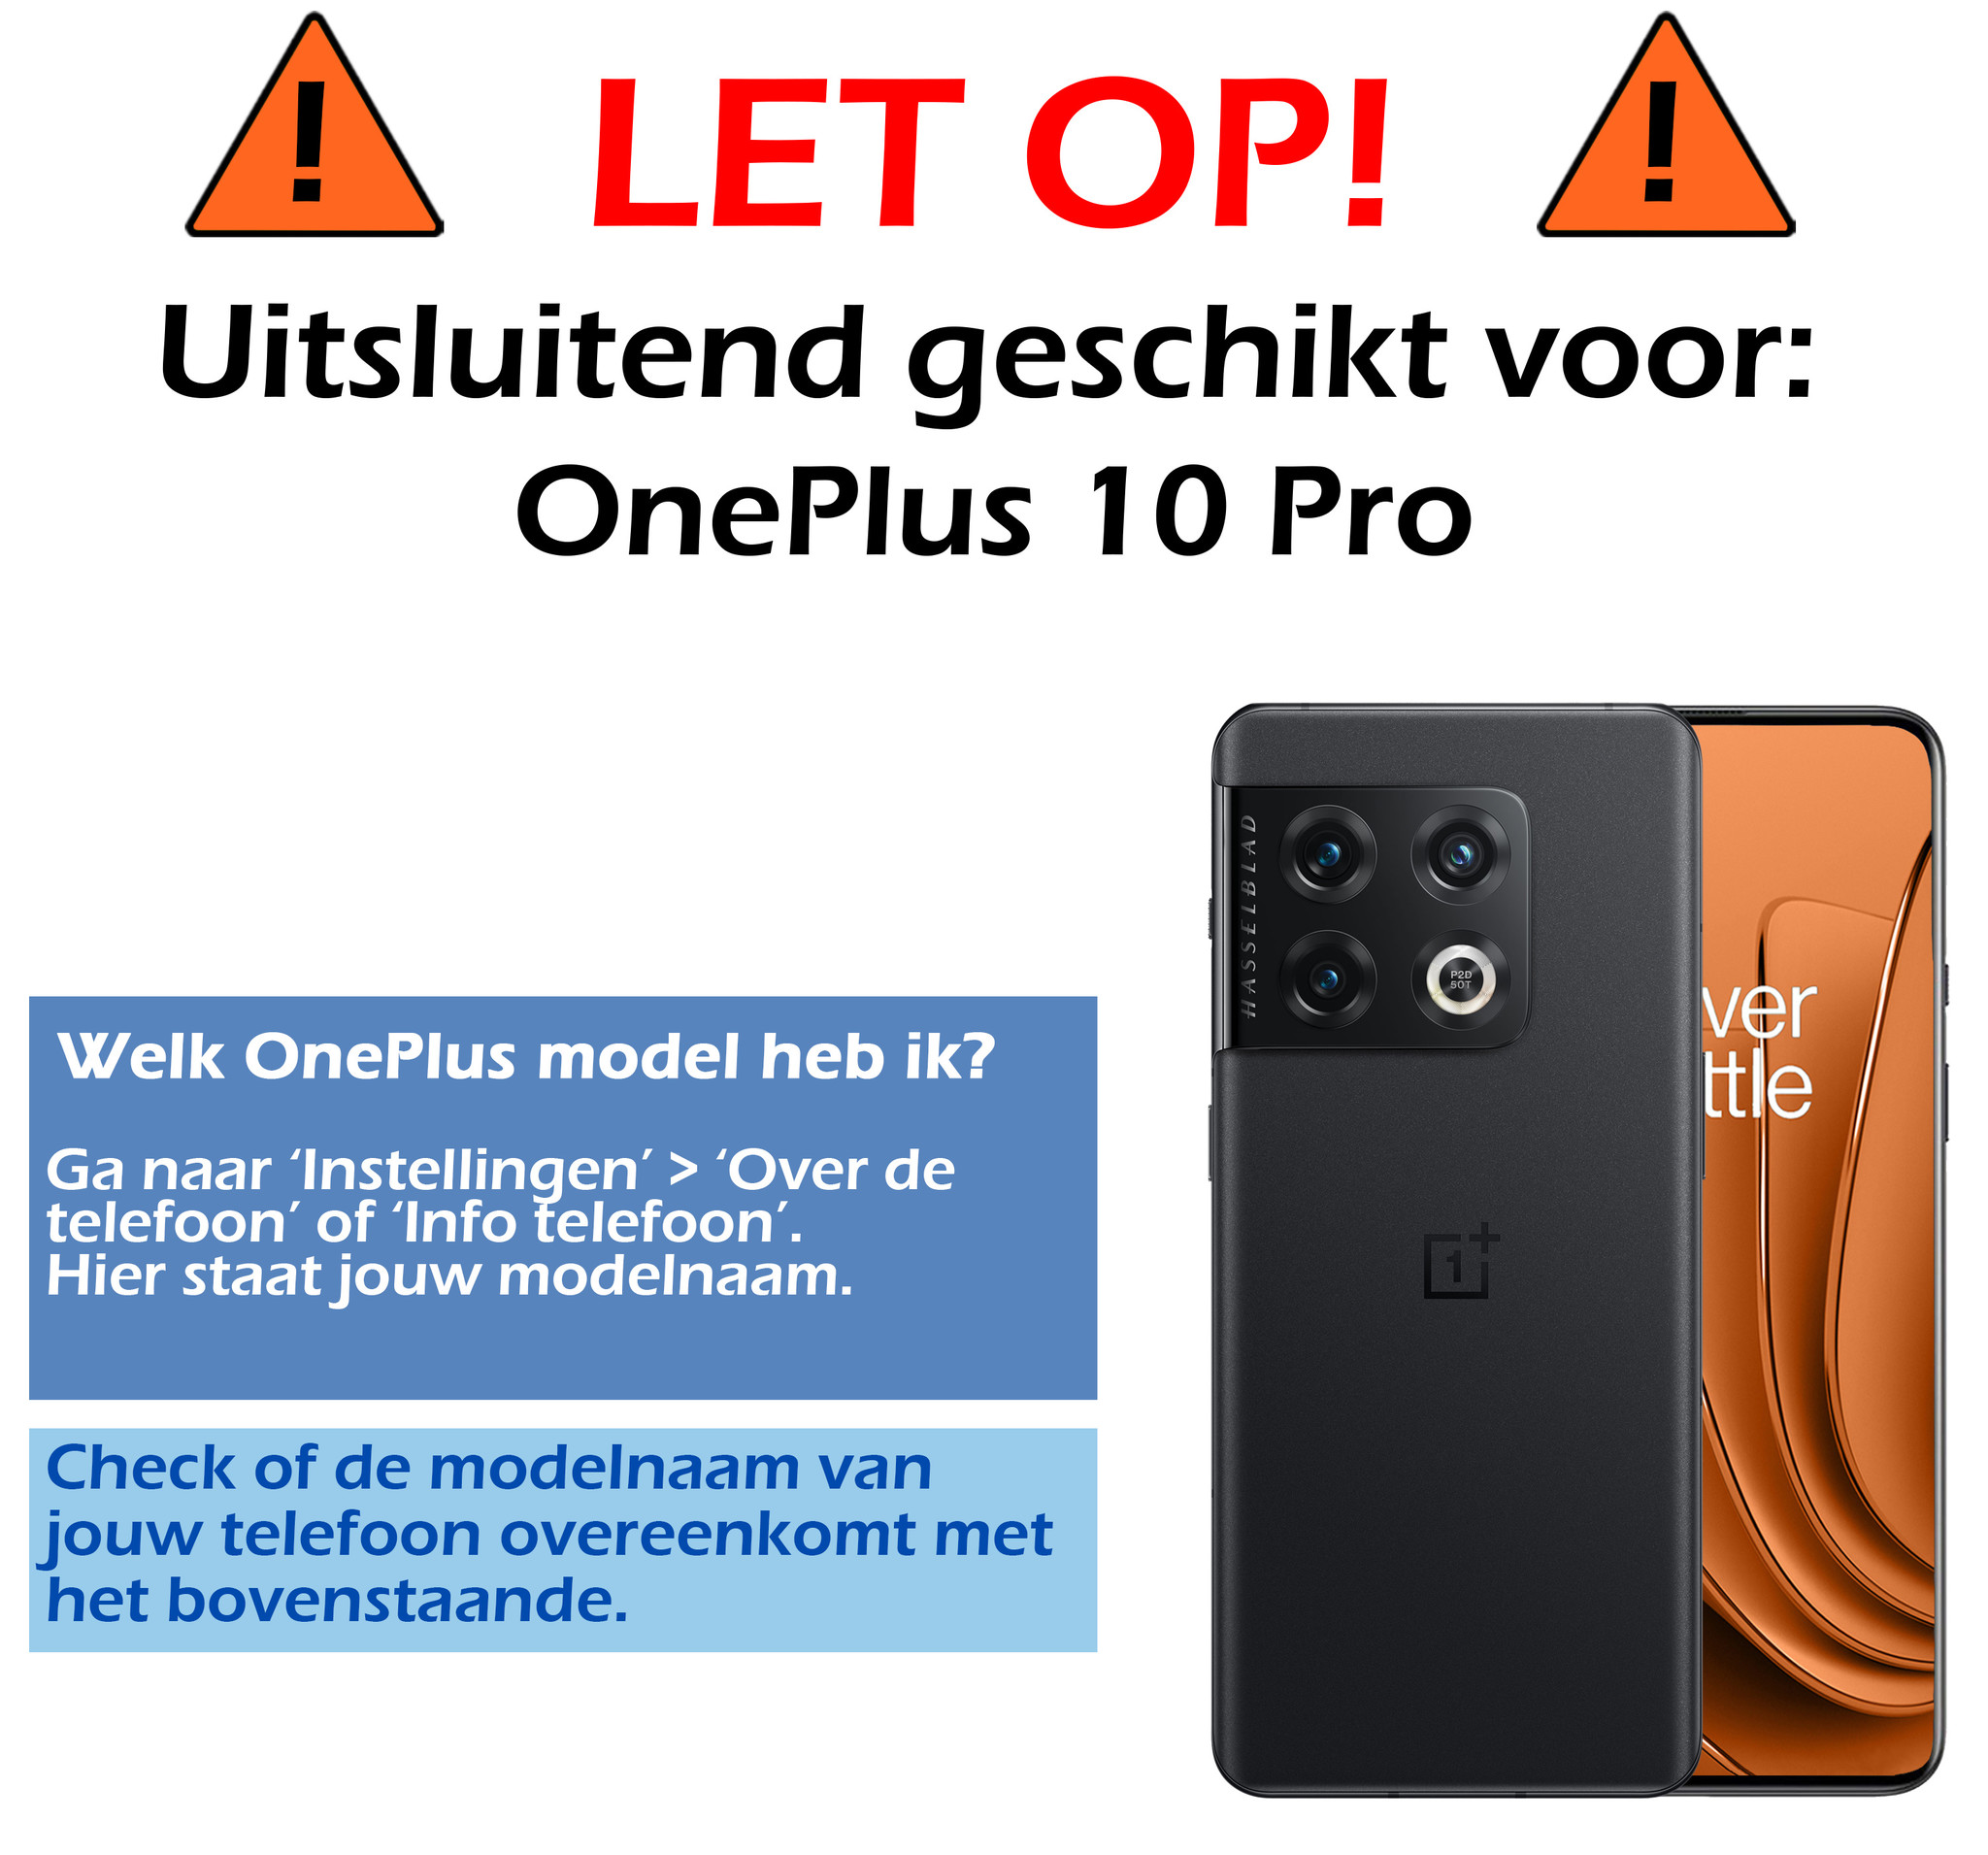 OnePlus 10 Pro Hoesje Siliconen - OnePlus 10 Pro Hoesje Transparant Case - OnePlus 10 Pro Cover Siliconen Back Cover - Transparant 2 Stuks